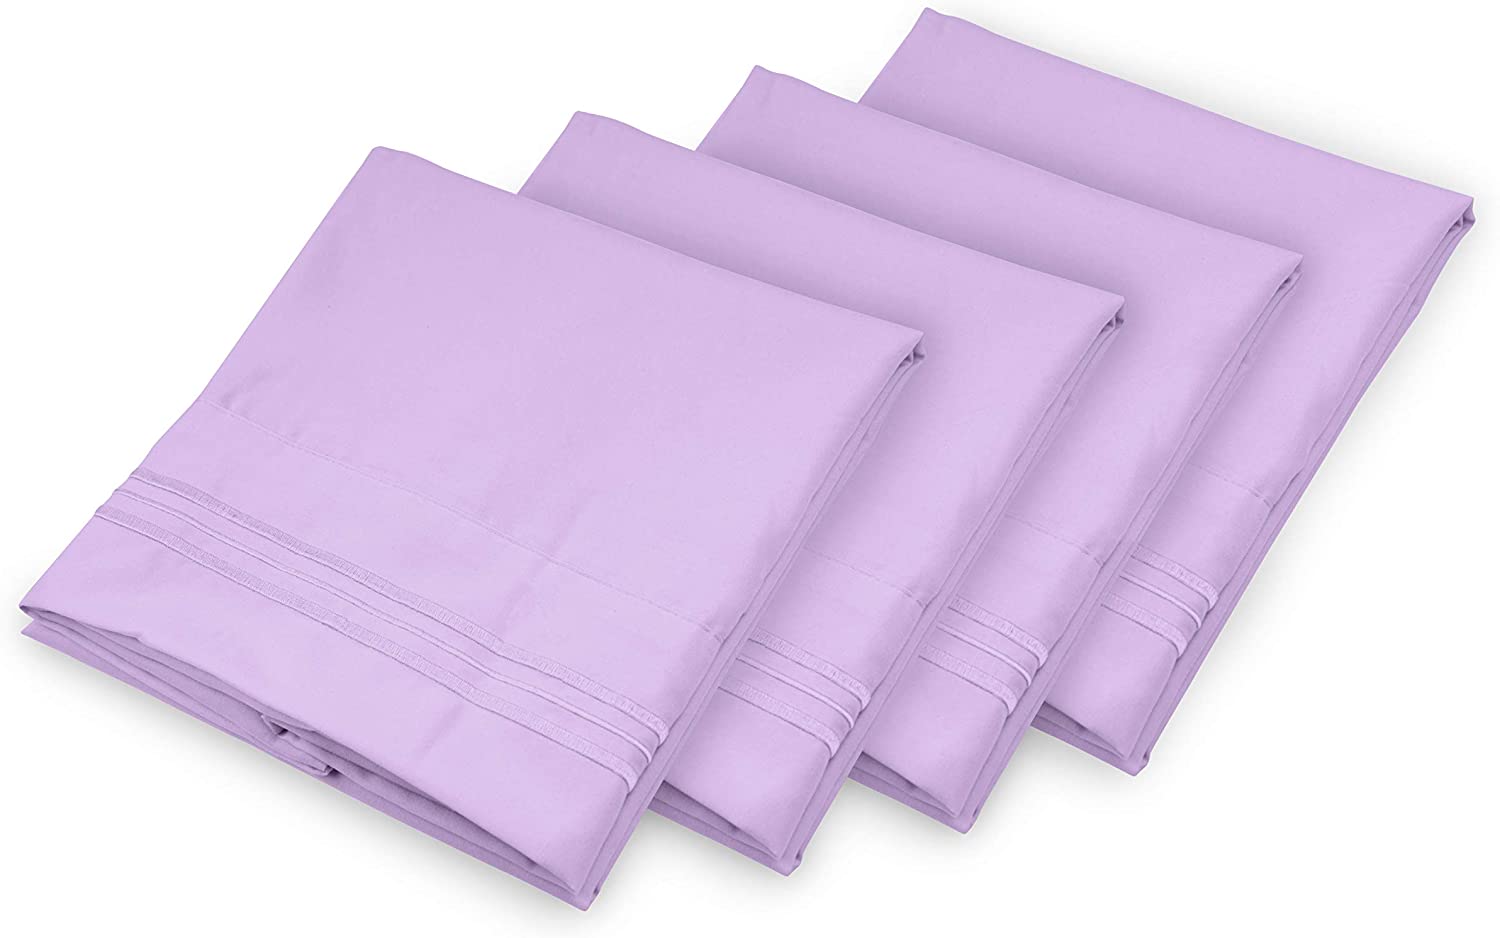 tes 4 Pillowcase Set - Lavender